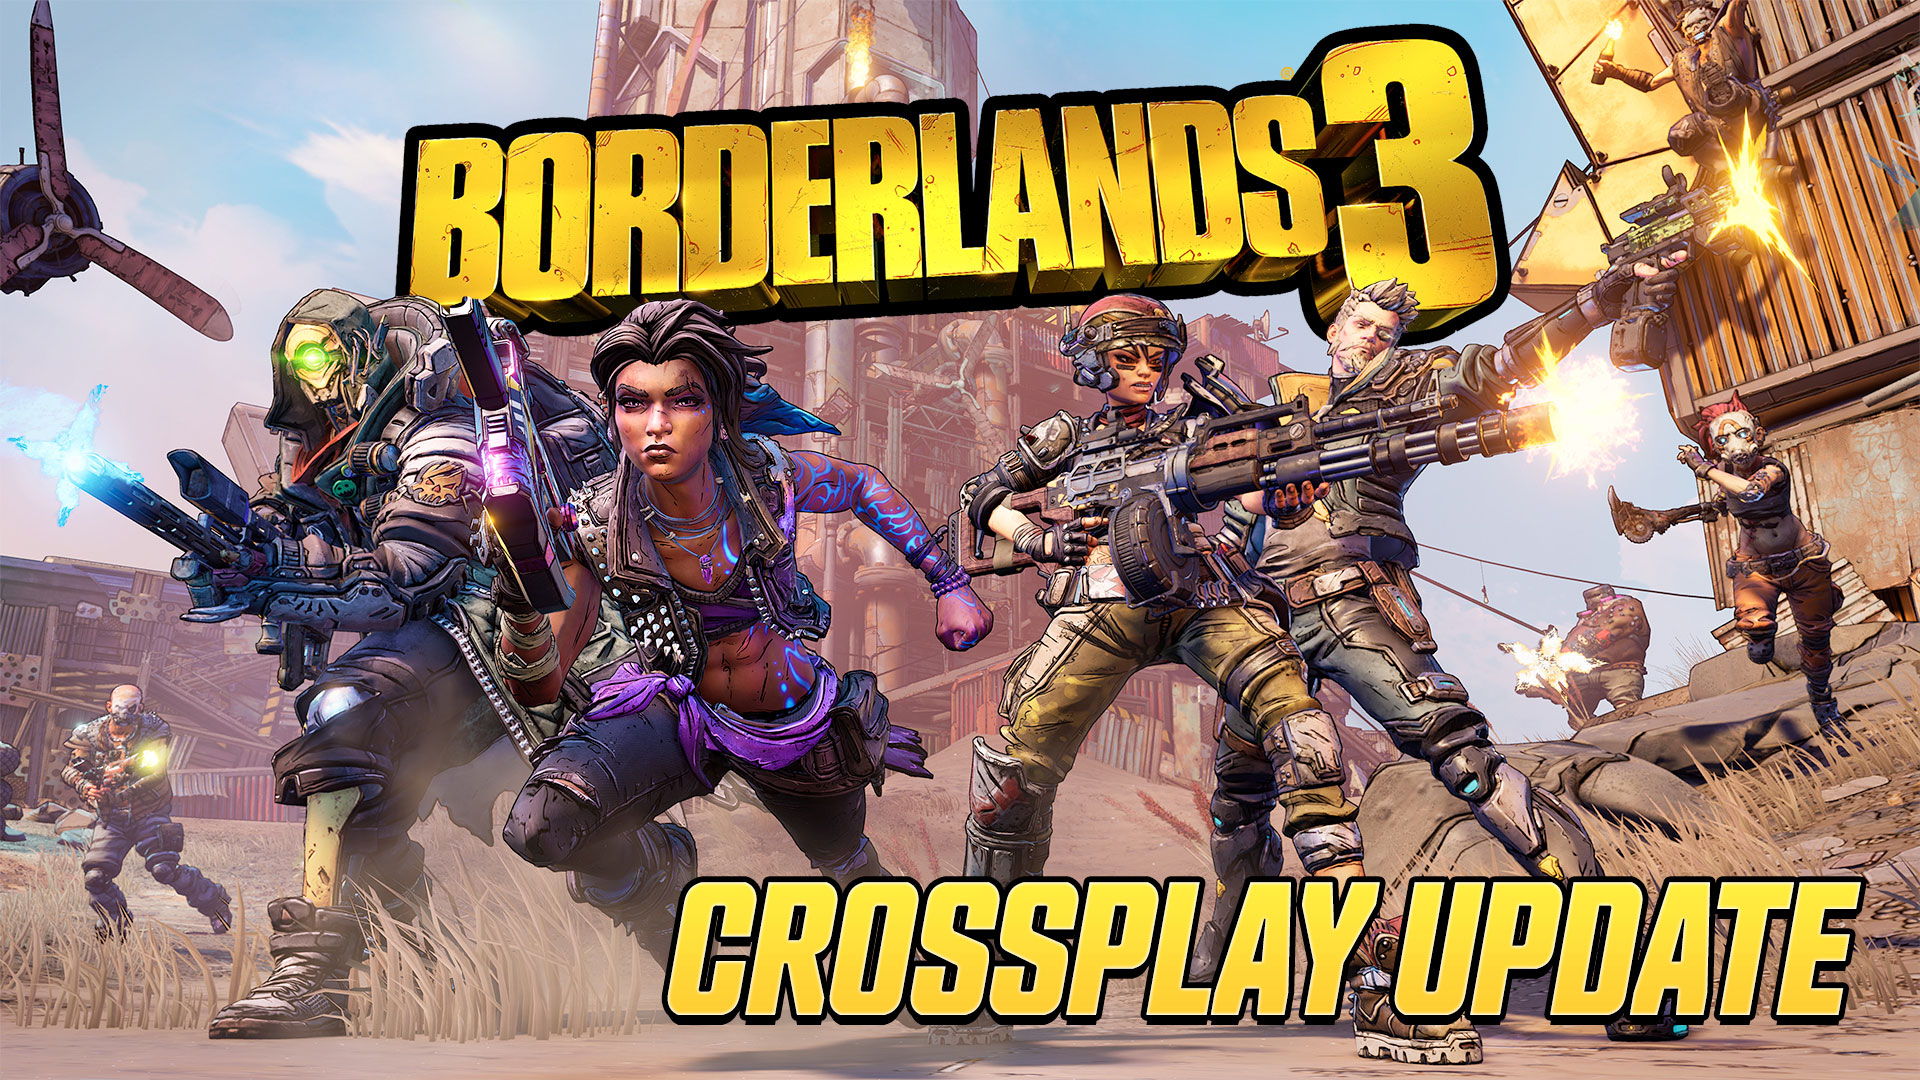 PS3 및 PS4 지원과 함께 Borderlands 5 크로스 플레이 업데이트 출시